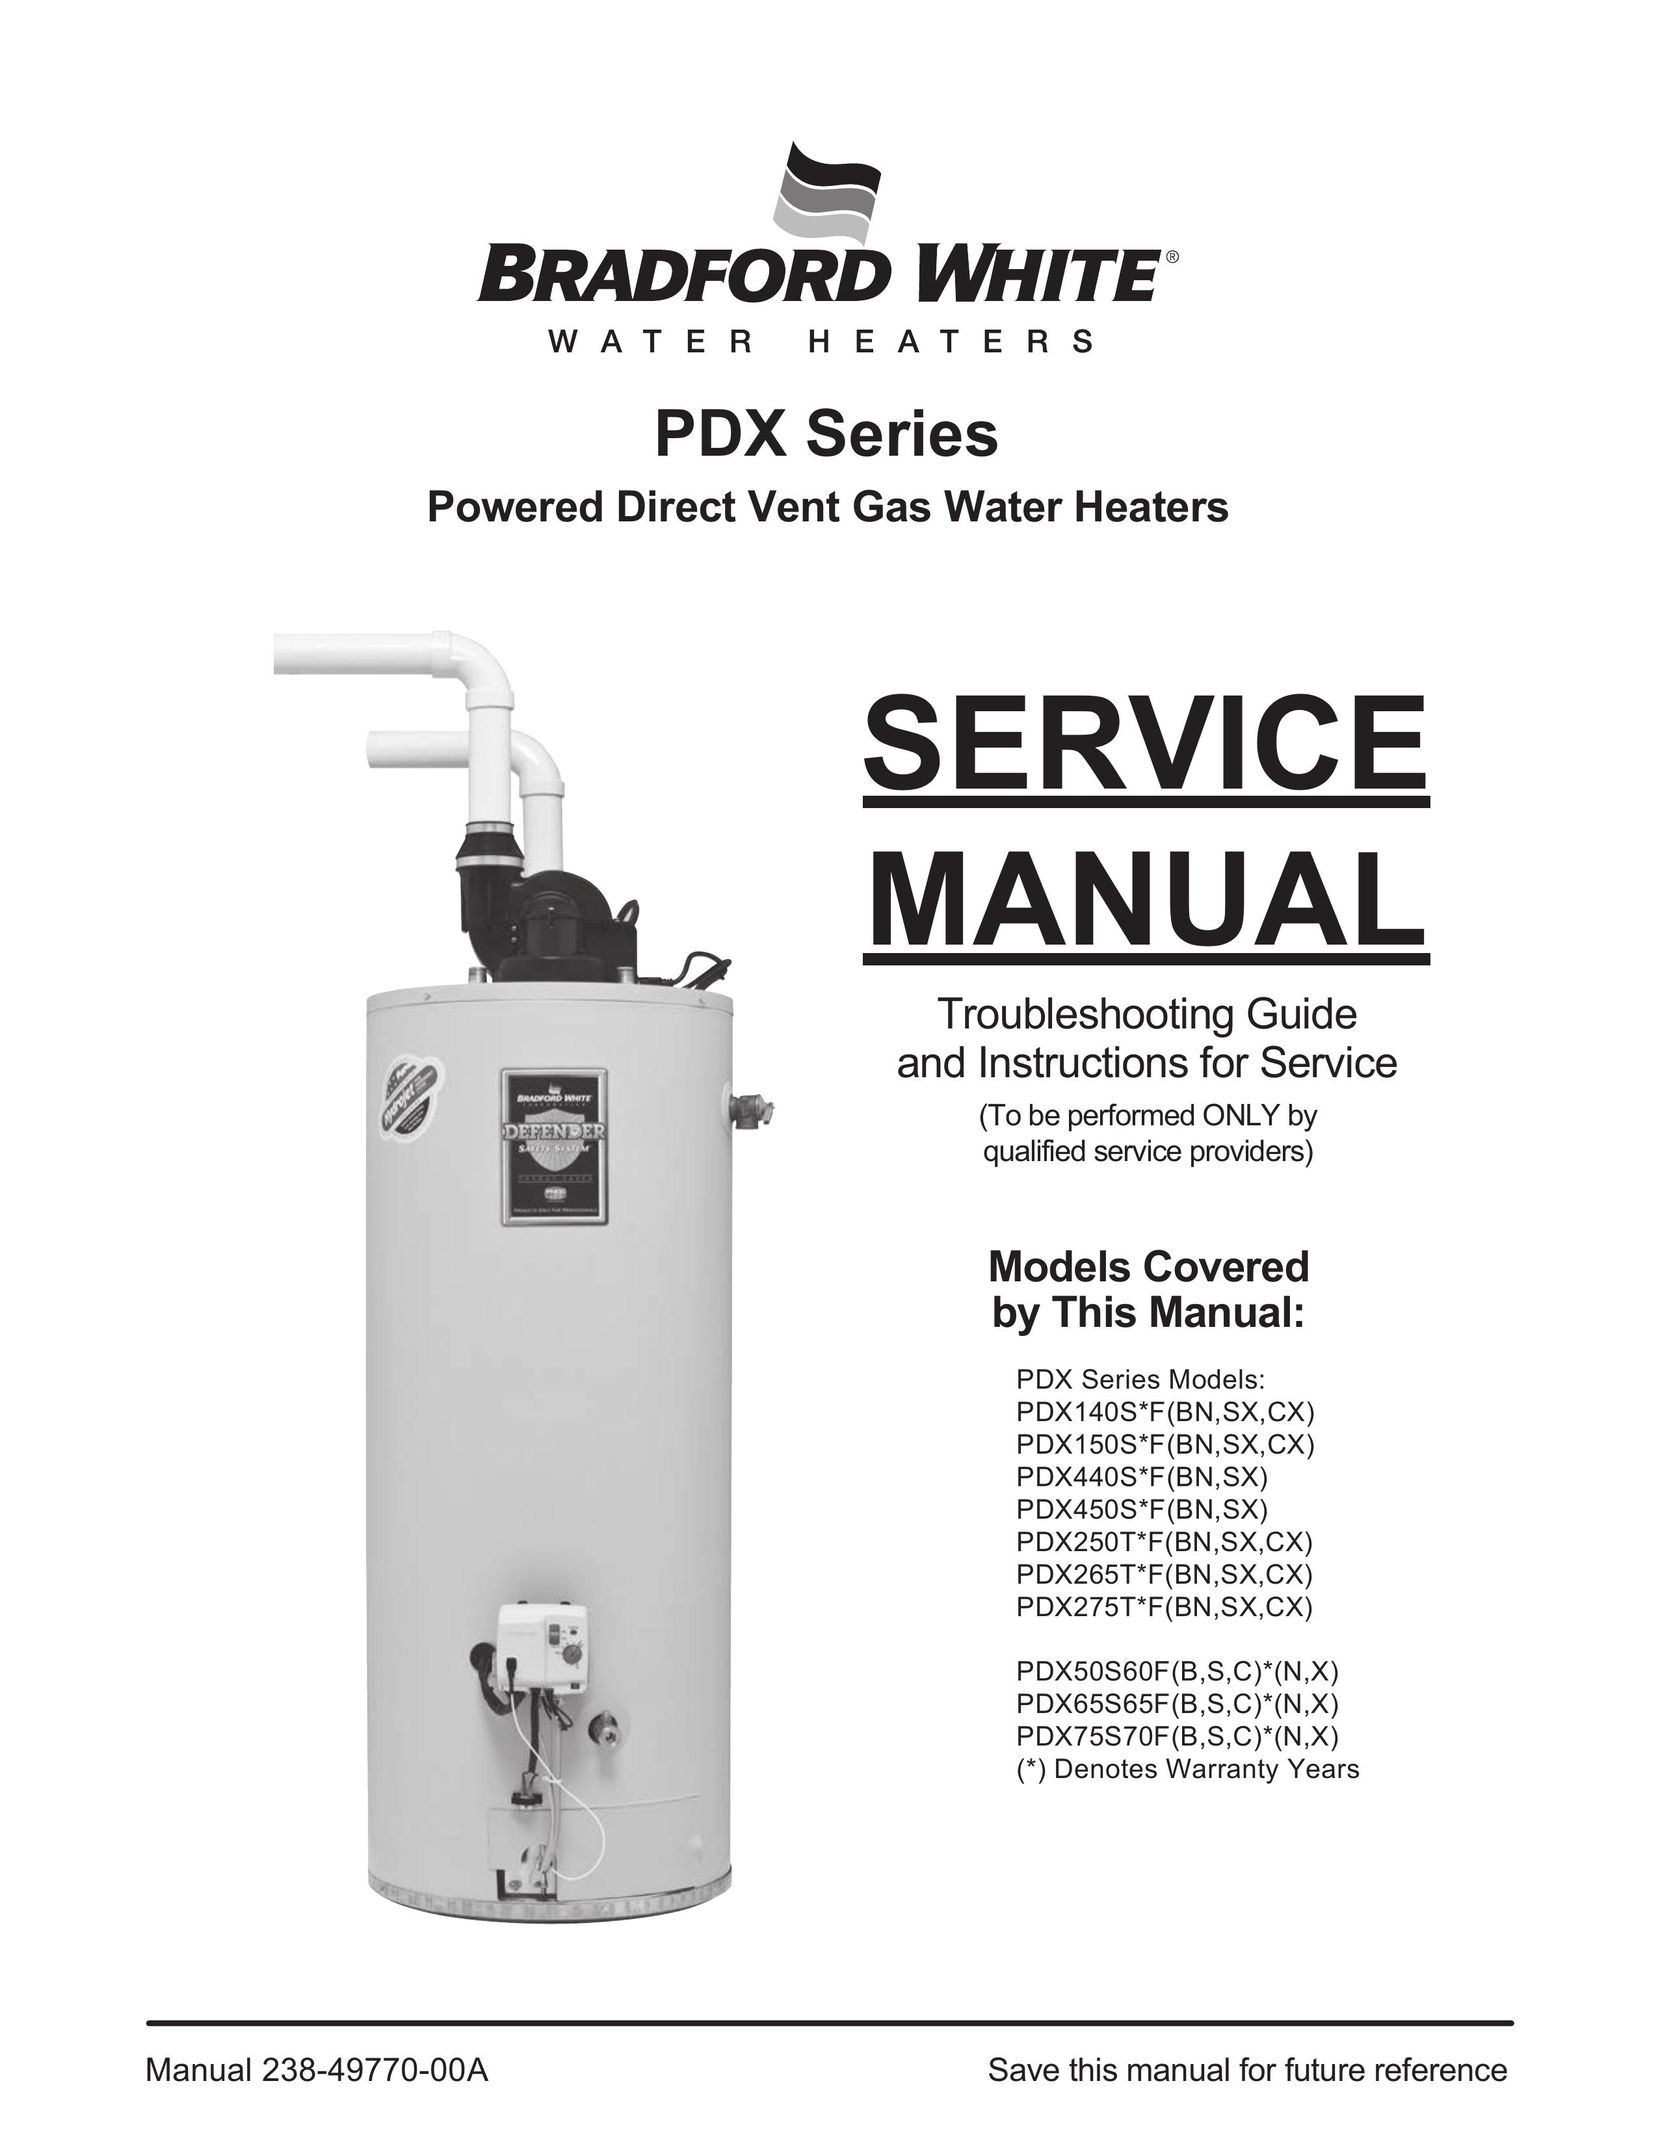 Honeywell PDX65S65F(B,S,C)*(N,X) Water Heater User Manual